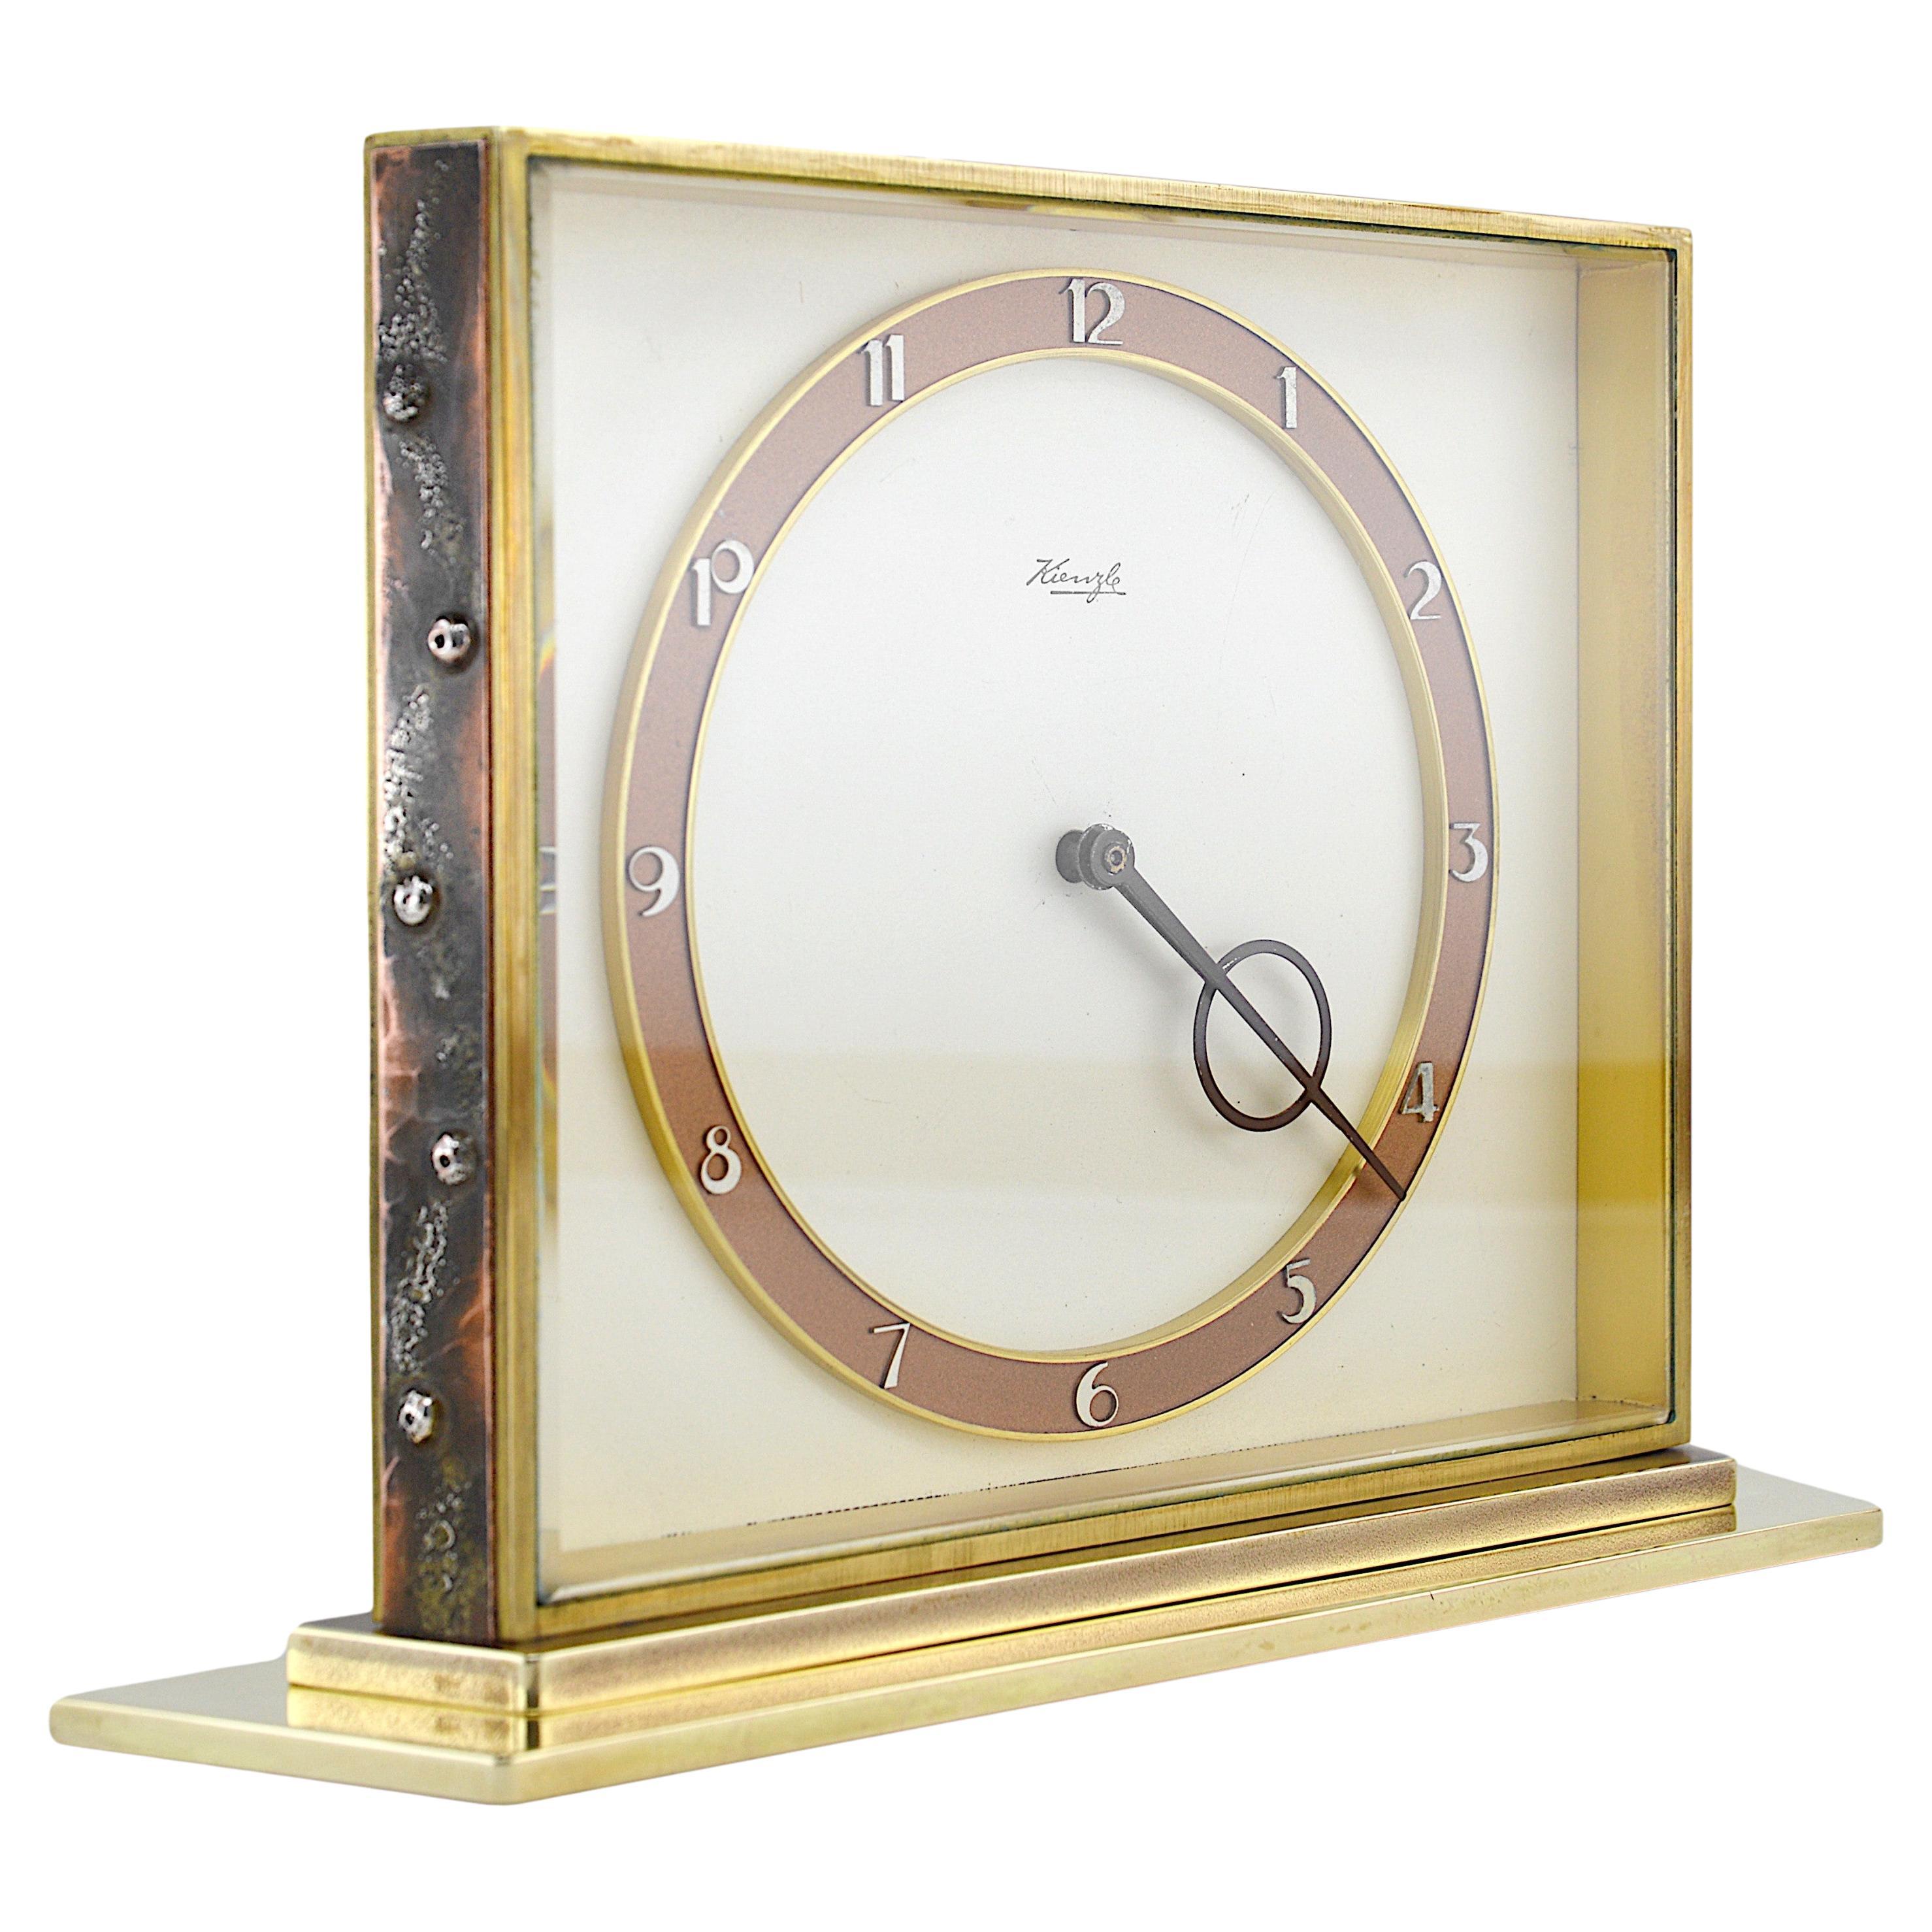 Kienzle German Midcentury Table Clock, 1950s